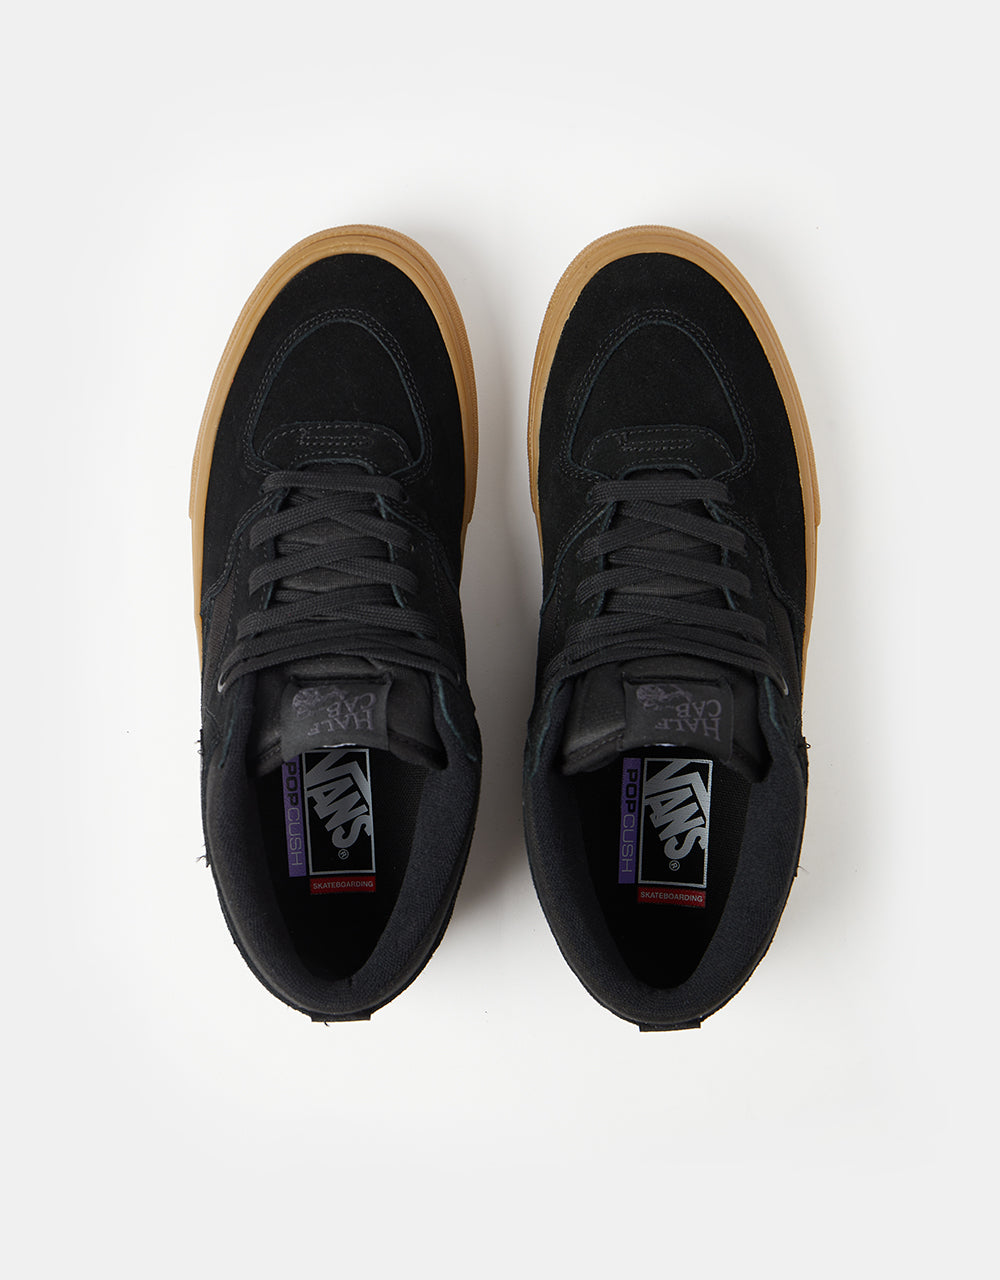 Vans Skate Half Cab Shoes - Black/Gum